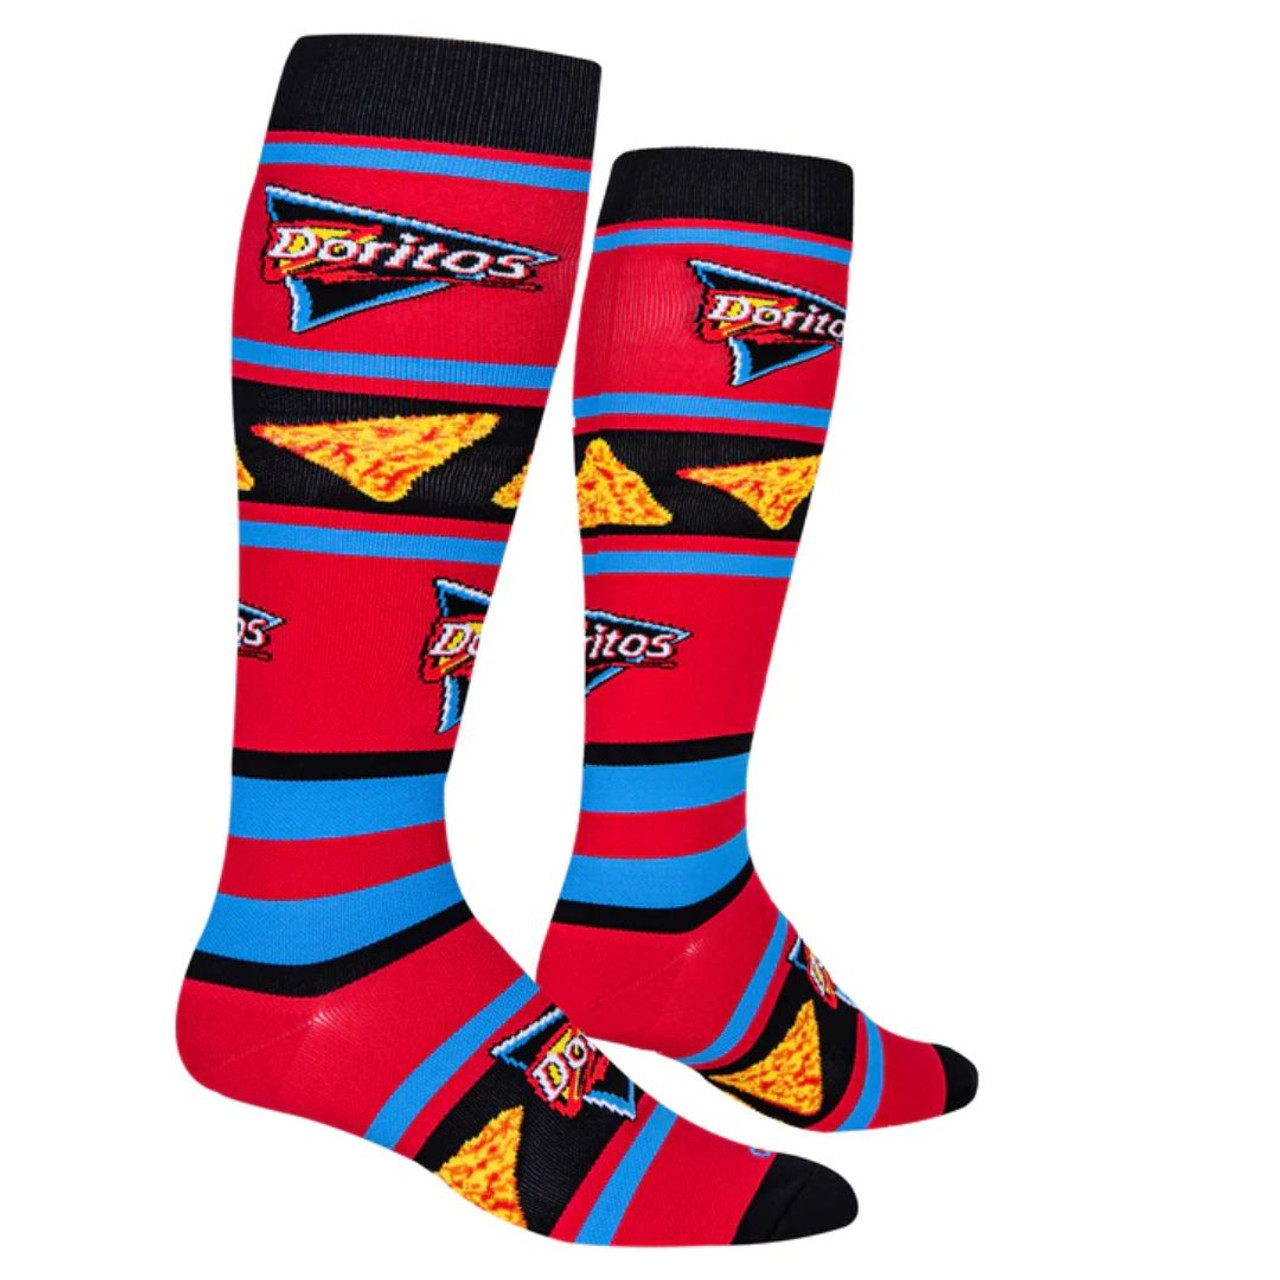 Retro Doritos Compression Socks by Cool Socks - RetroFestive.ca